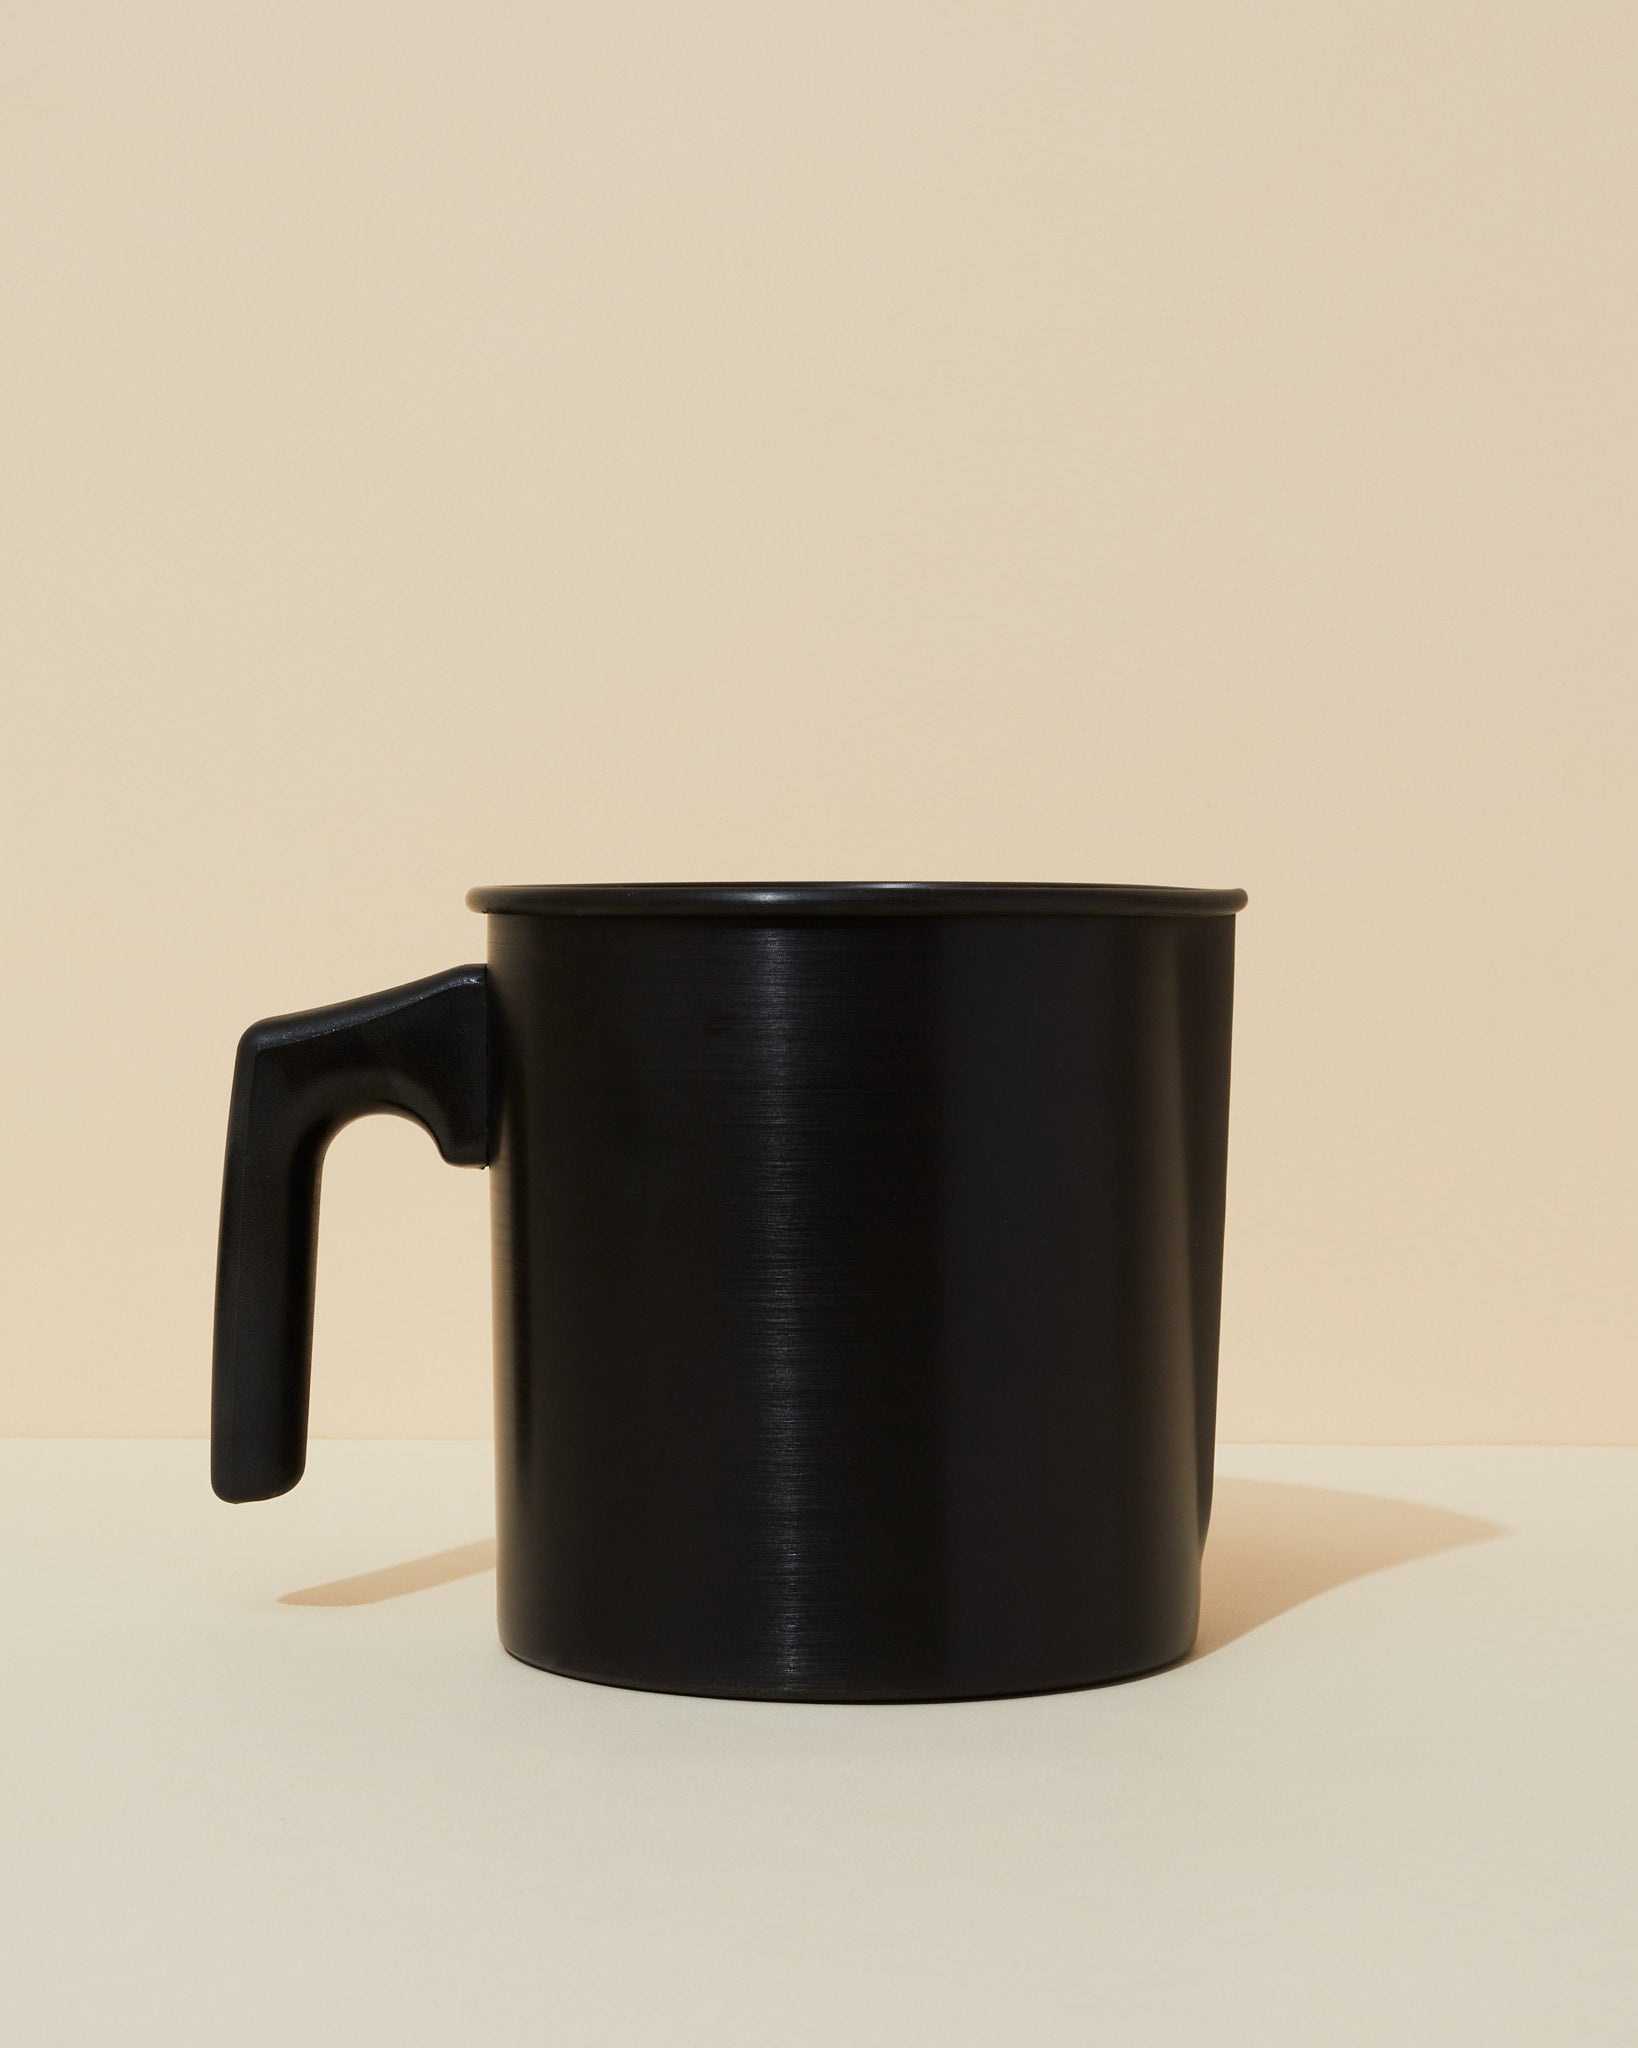 black pouring pitcher - Makesy